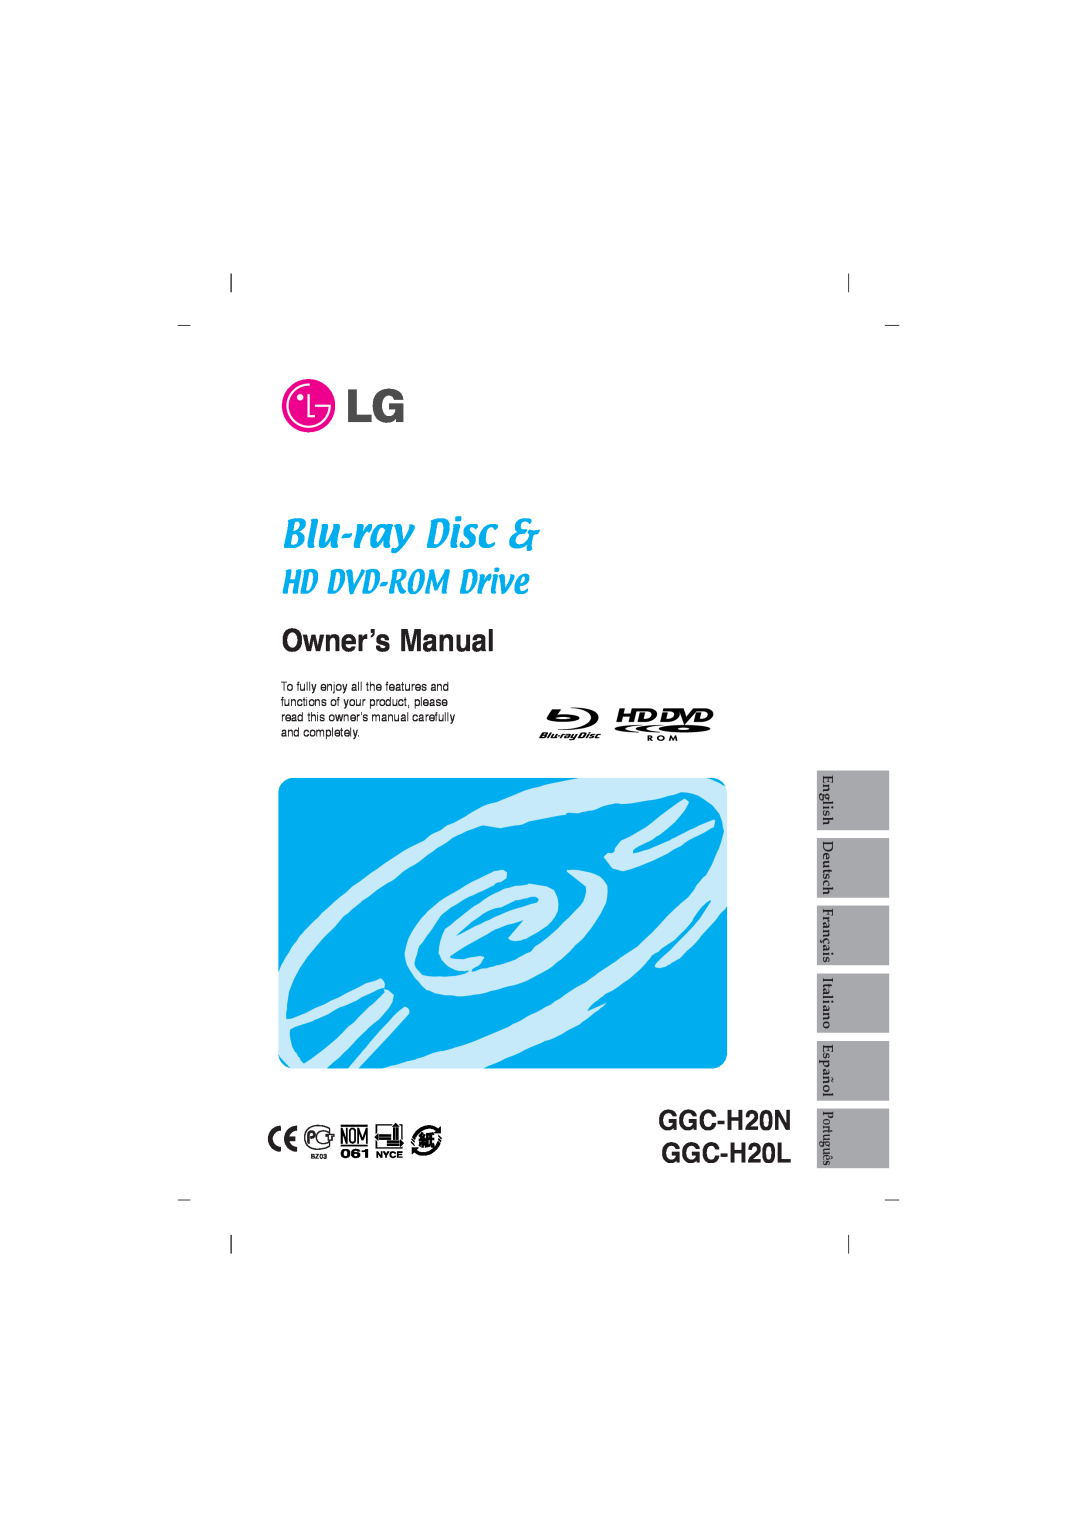 LG Electronics owner manual Blu-ray Disc, Owner’s Manual, HD DVD-ROM Drive, GGC-H20N GGC-H20L 